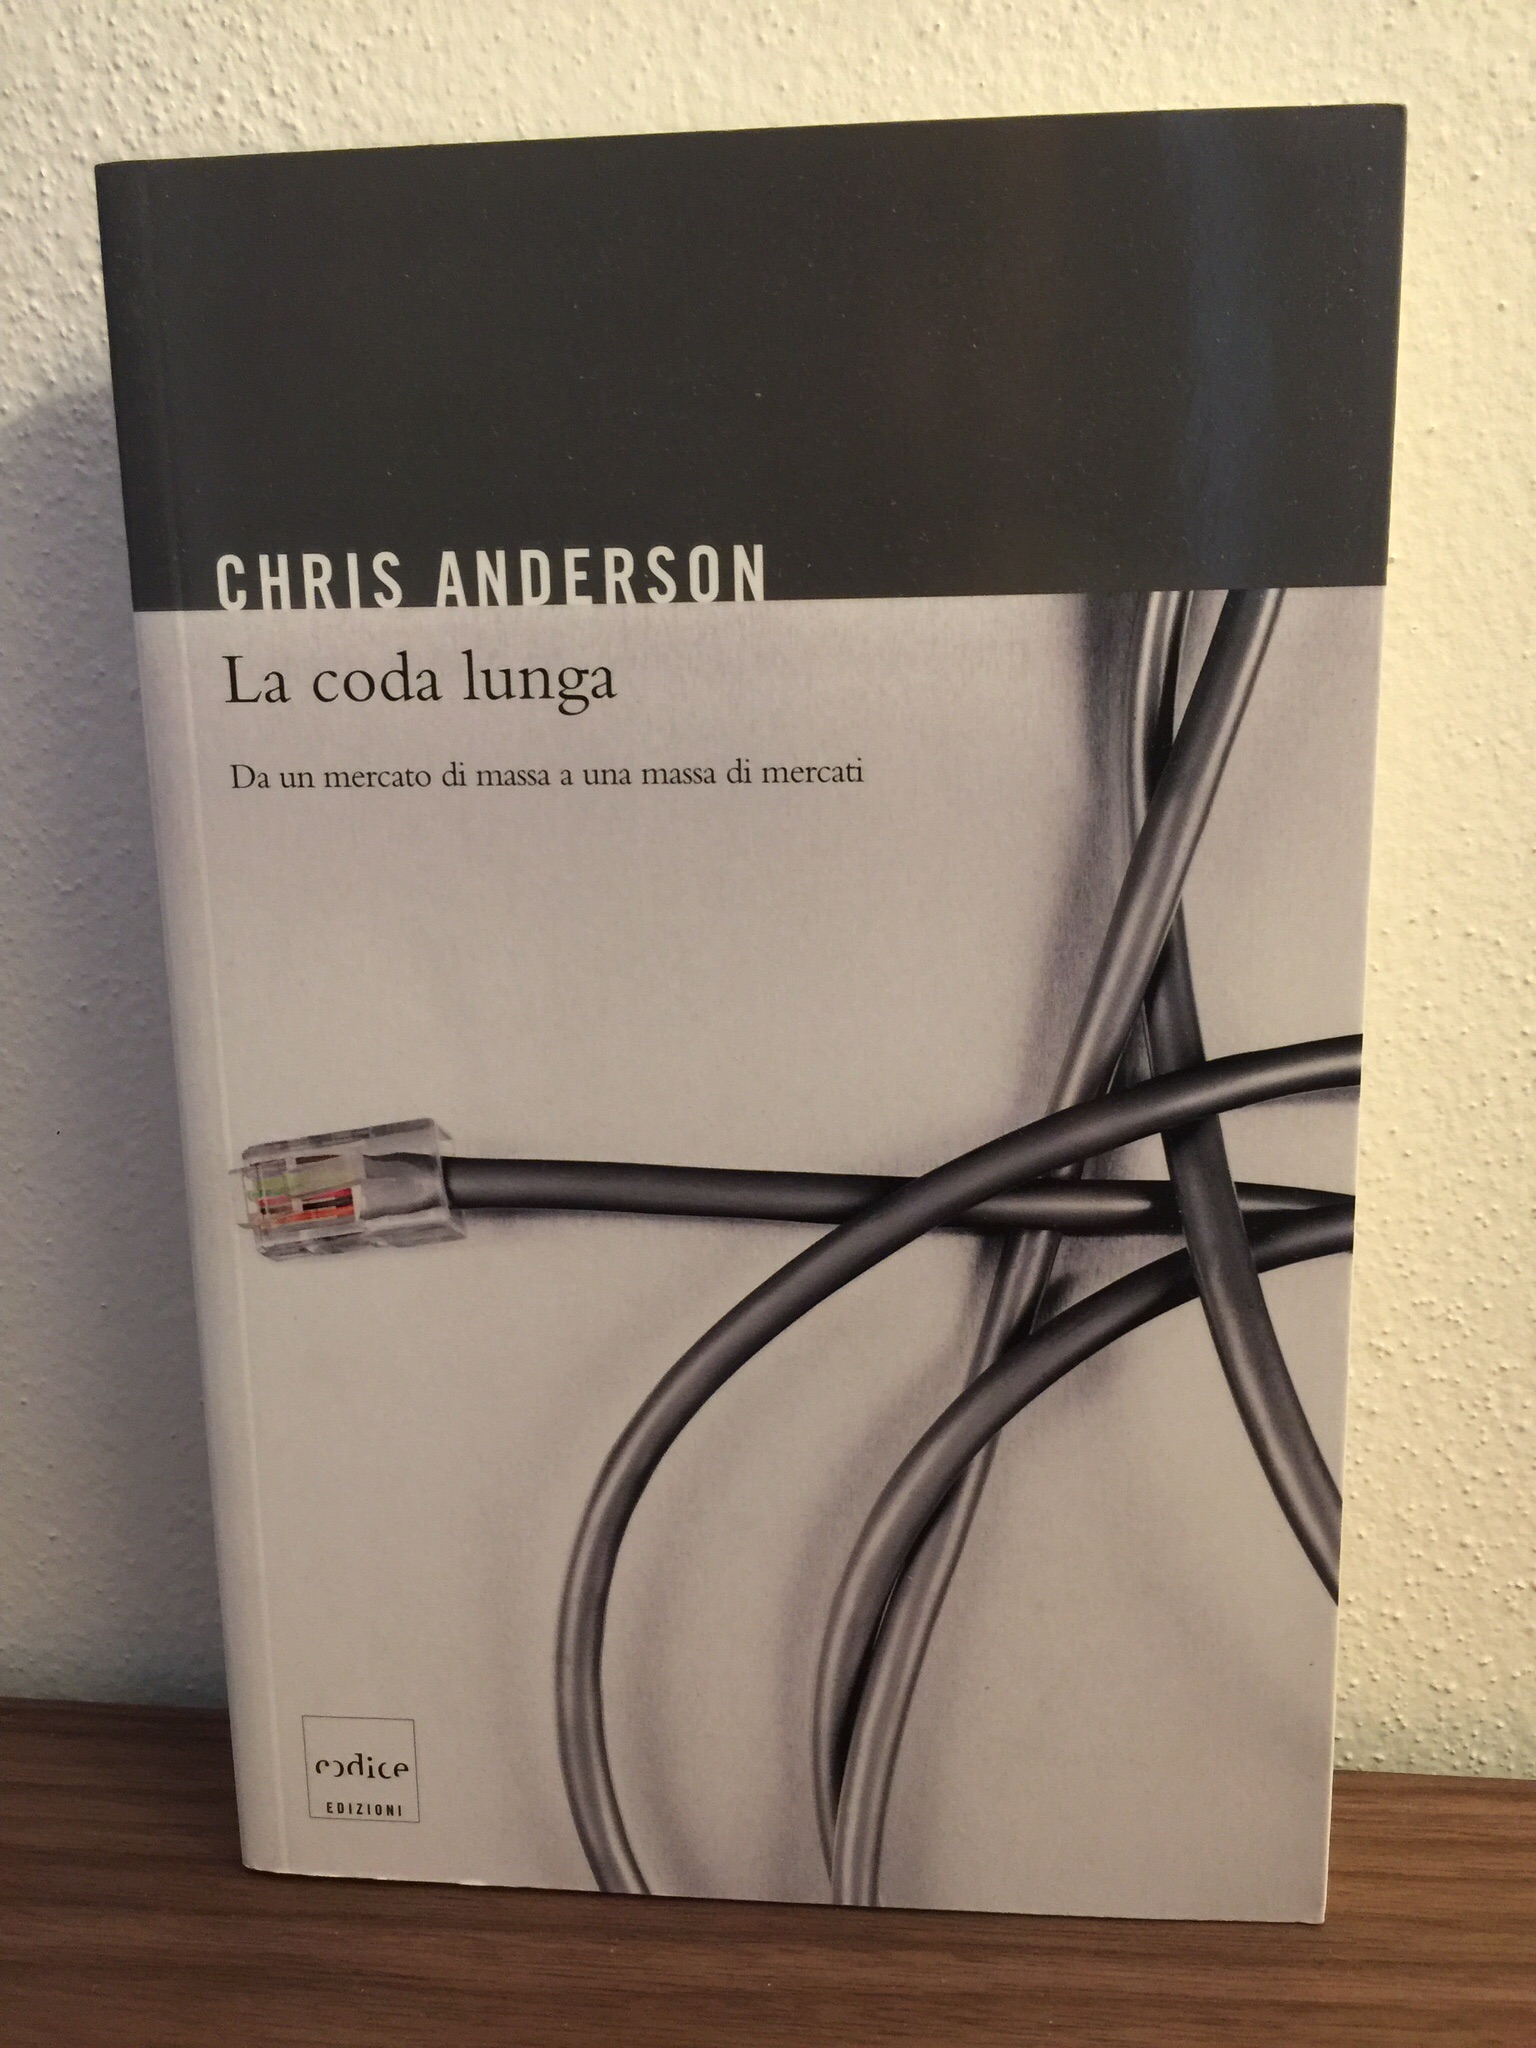 Chris Anderson – La coda lunga